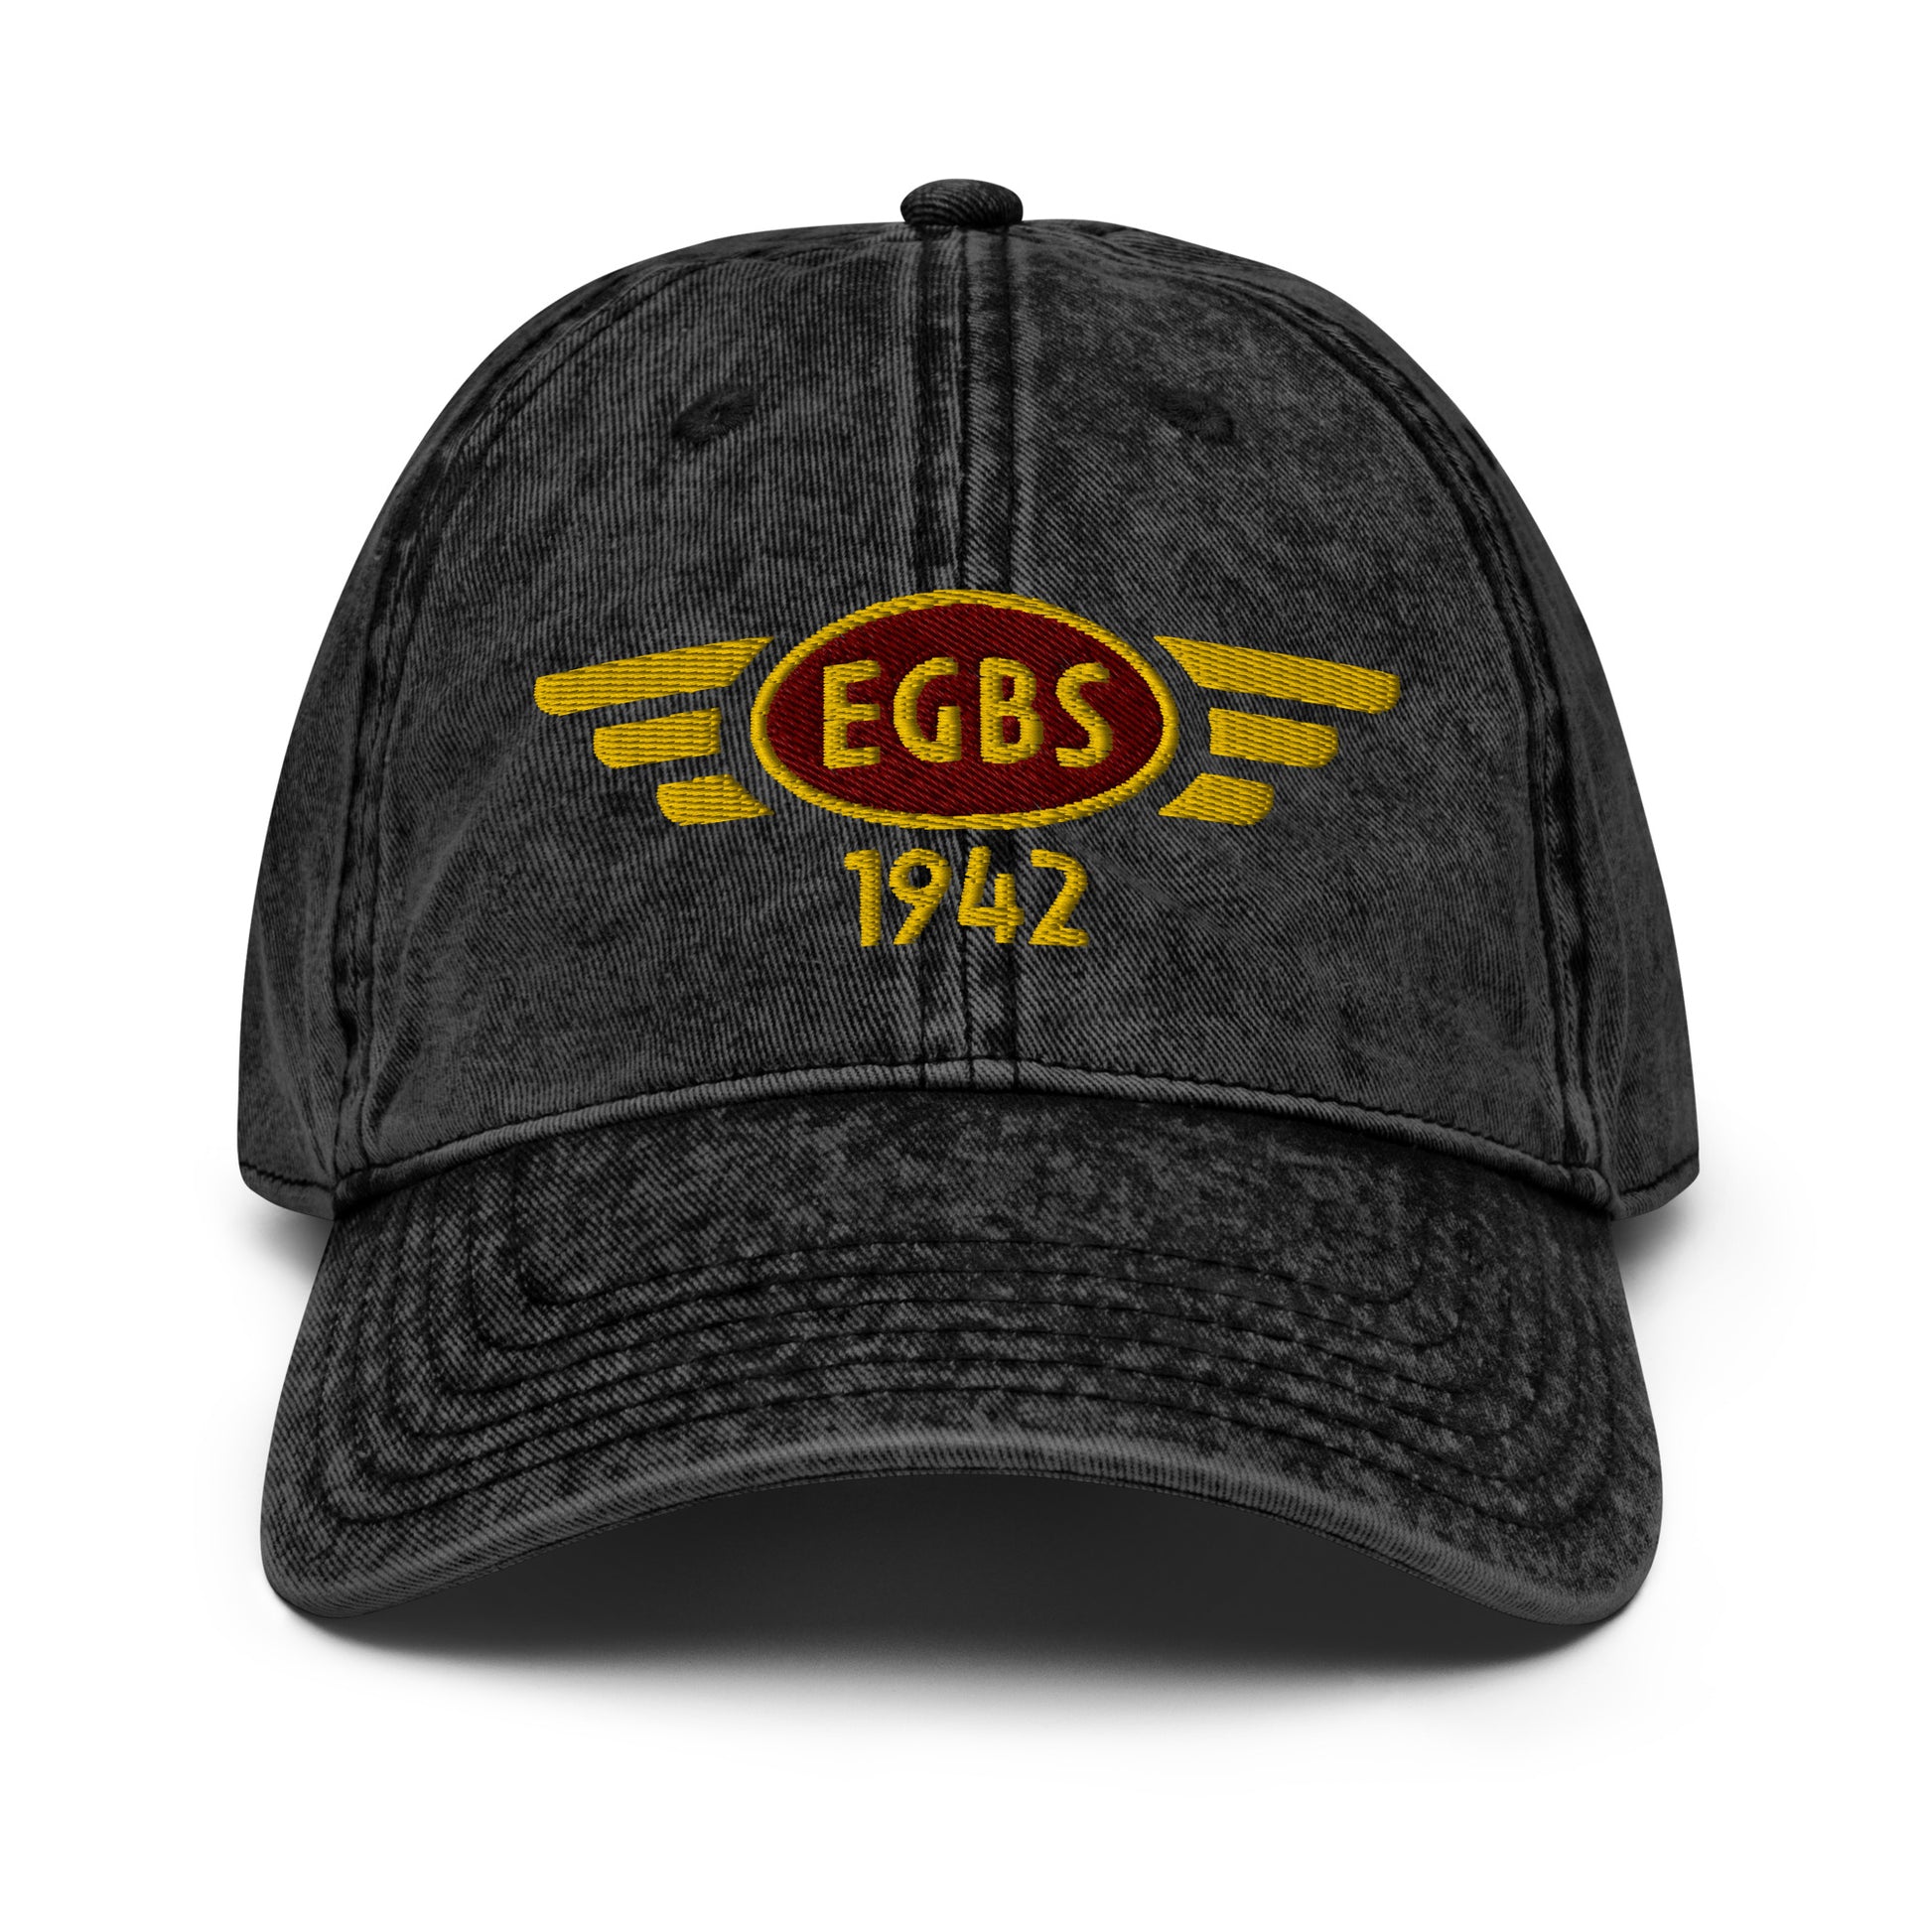 Black cotton twill baseball cap with embroidered vintage style aviation logo for Shobdon Aerodrome.